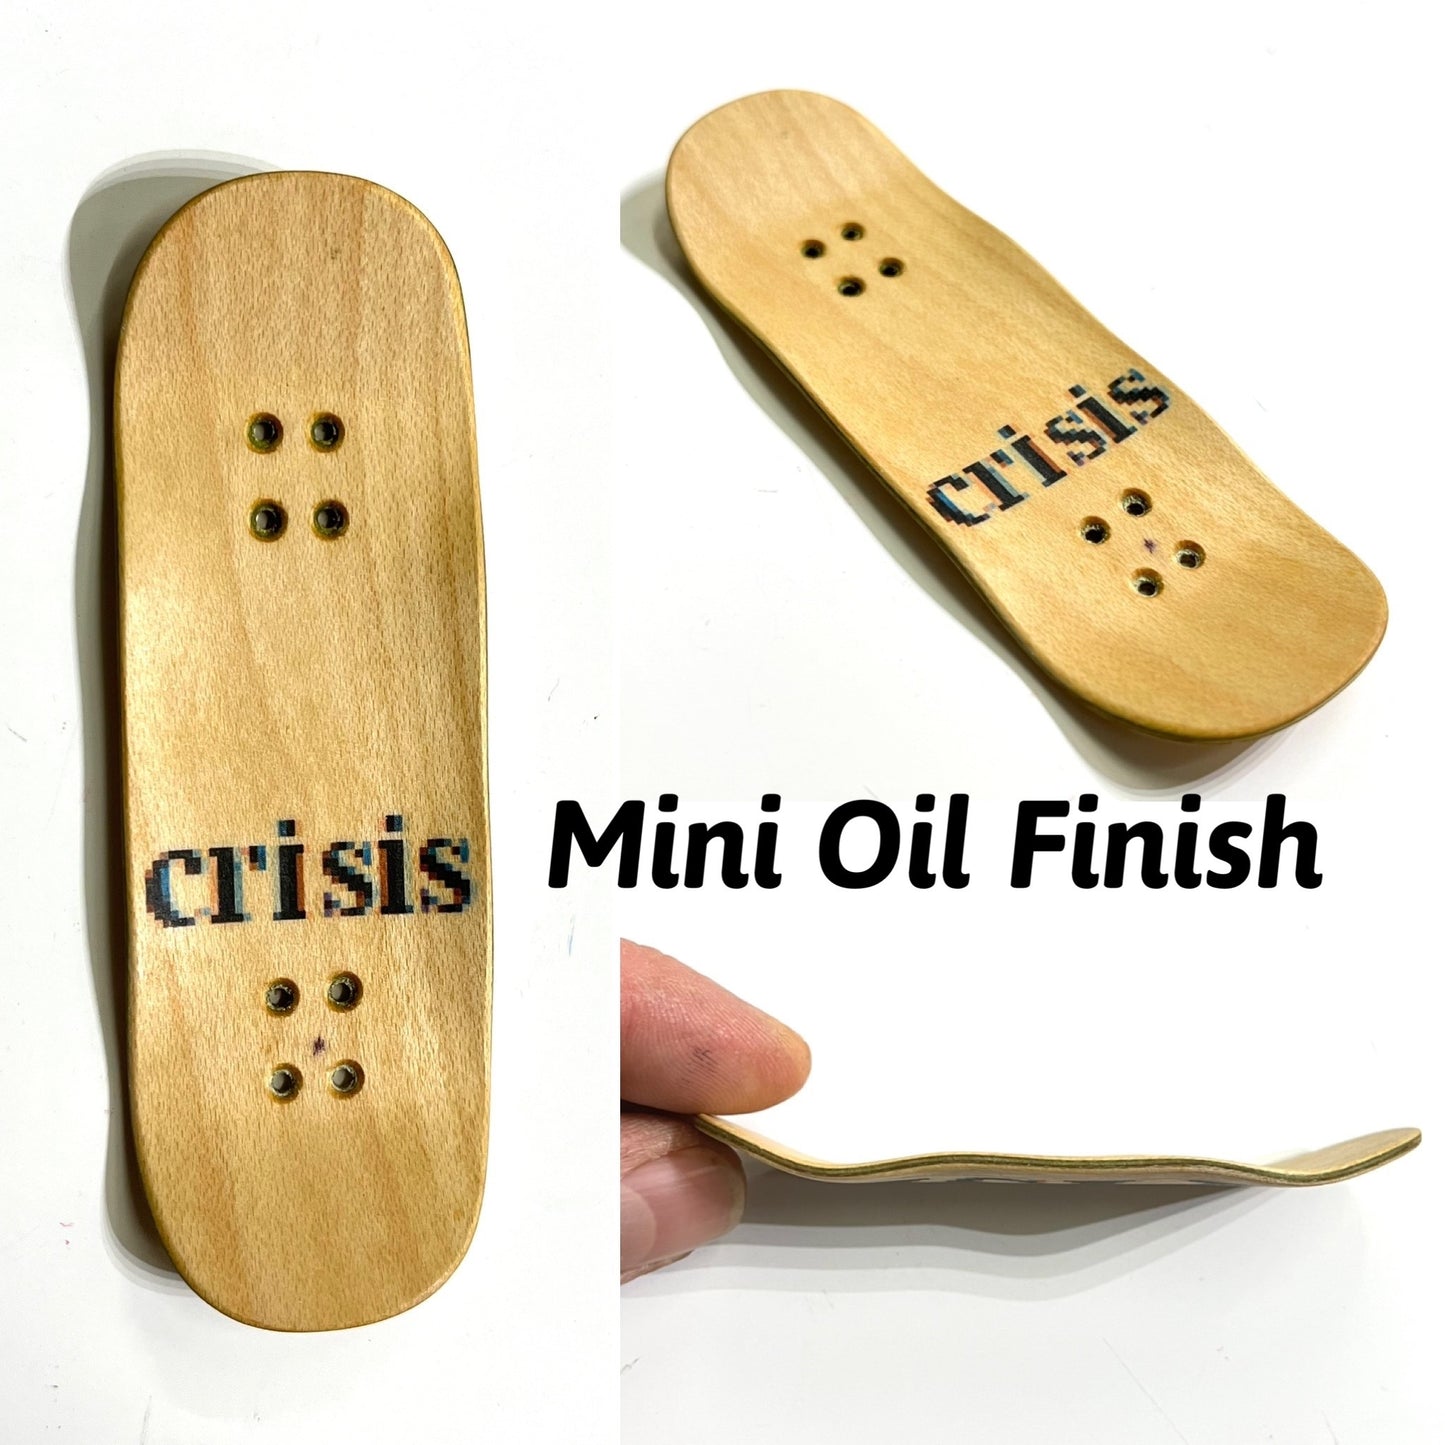 Crisis Fingerboards